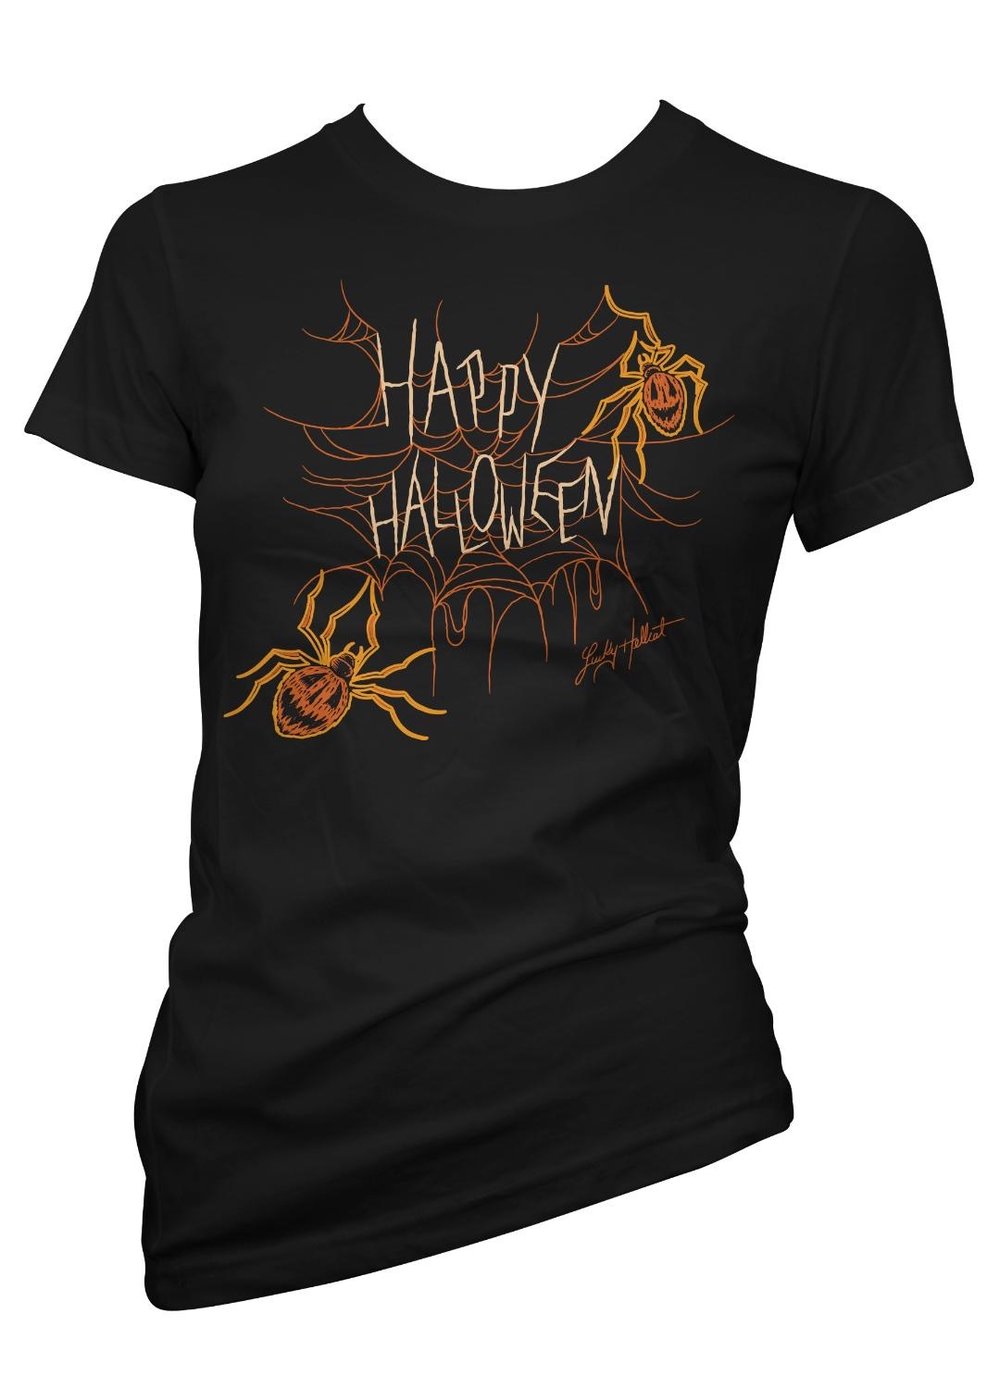 Spiderween Womans T-shirt 